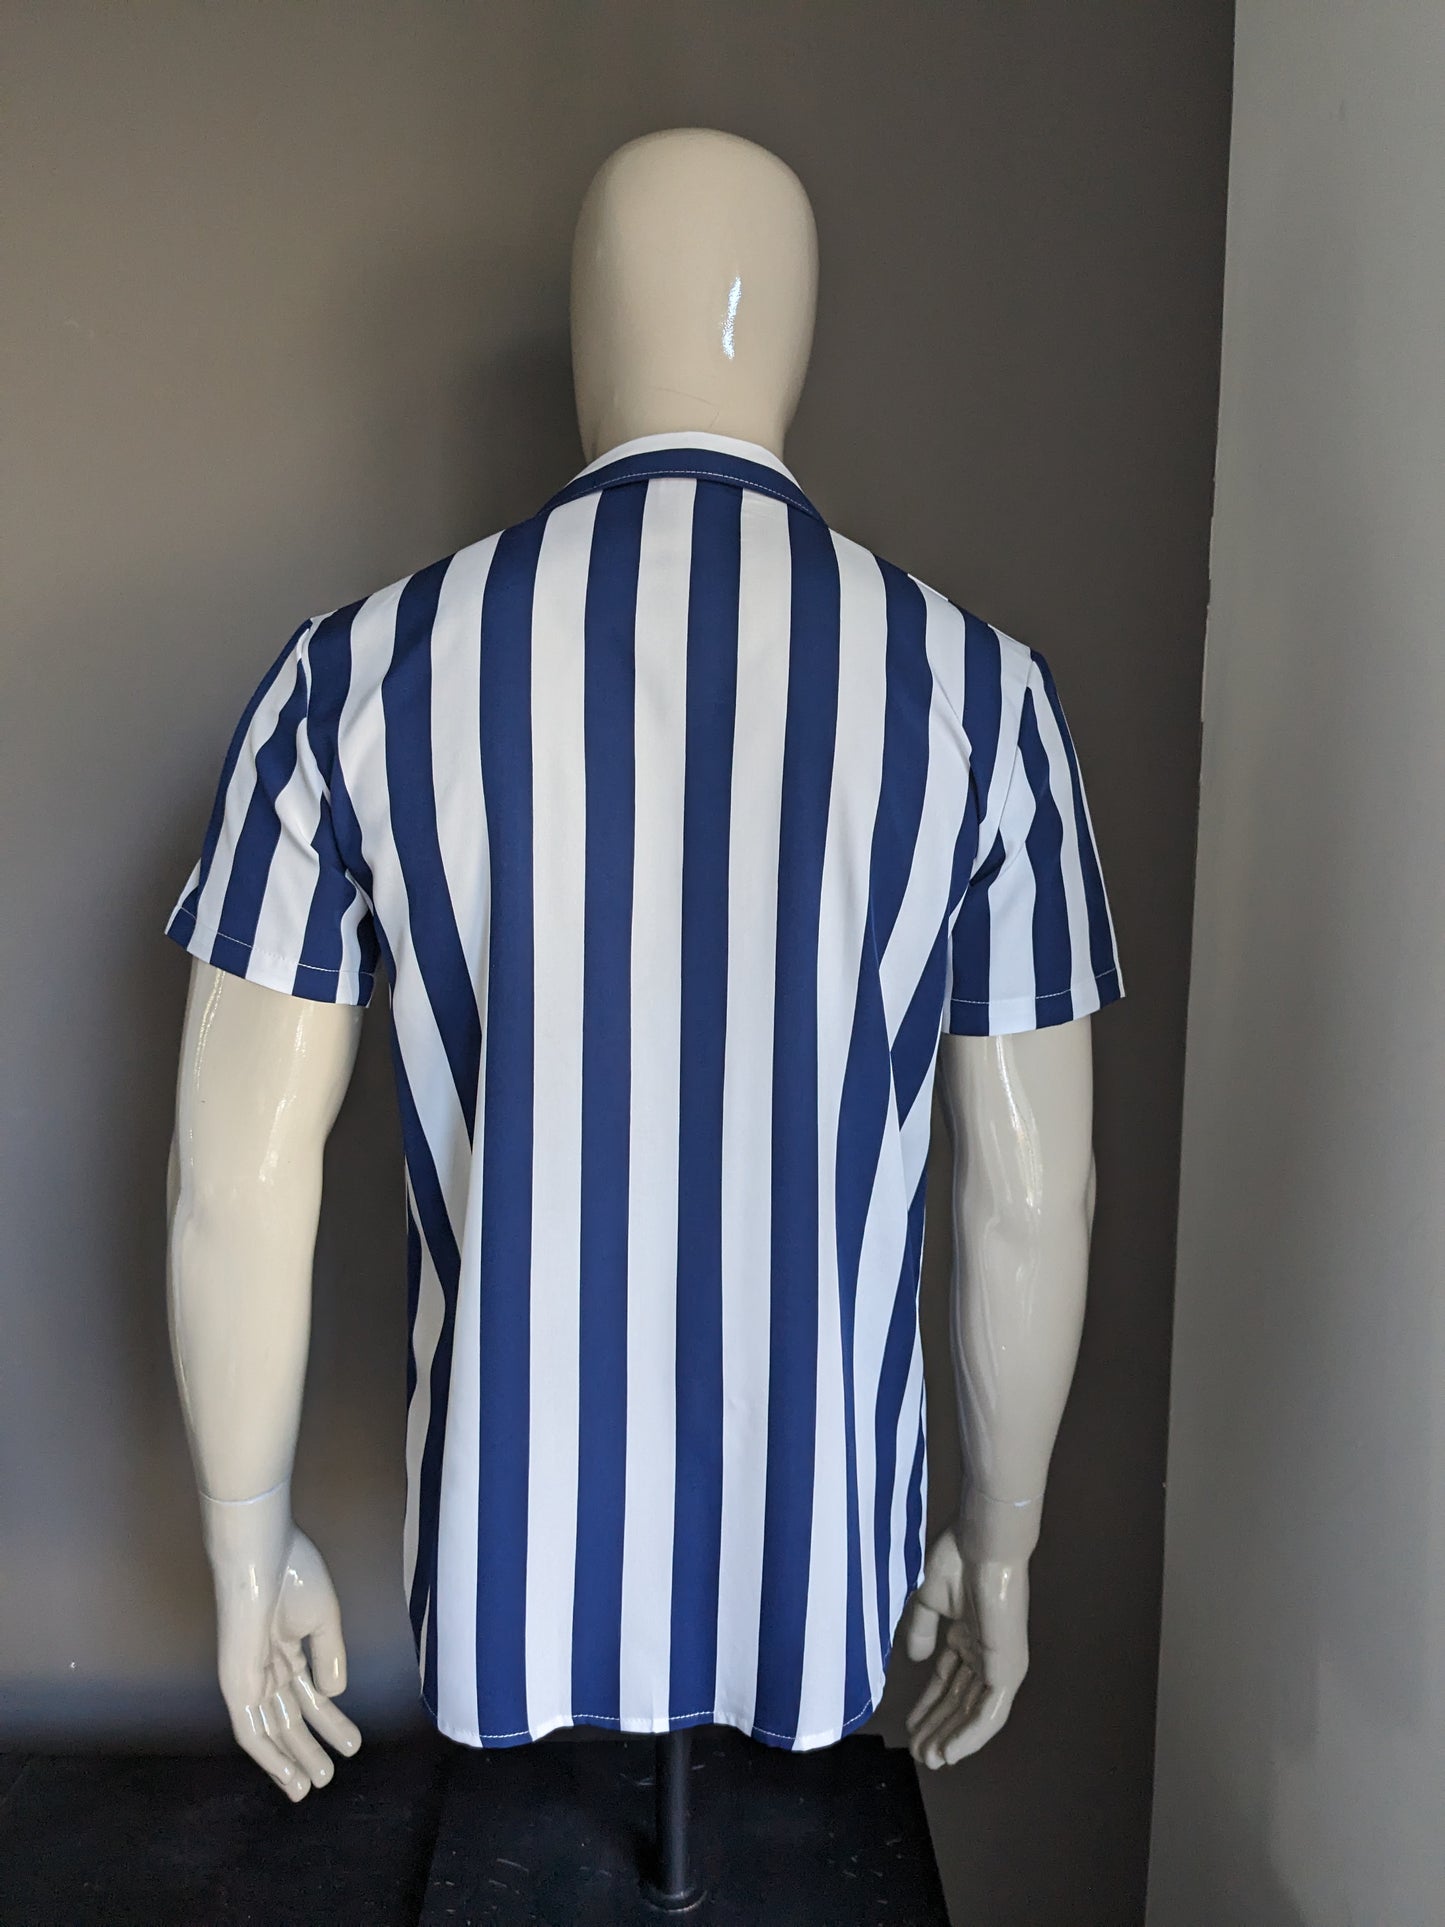 Brandless shirt short sleeve. Blue white striped. Size M.